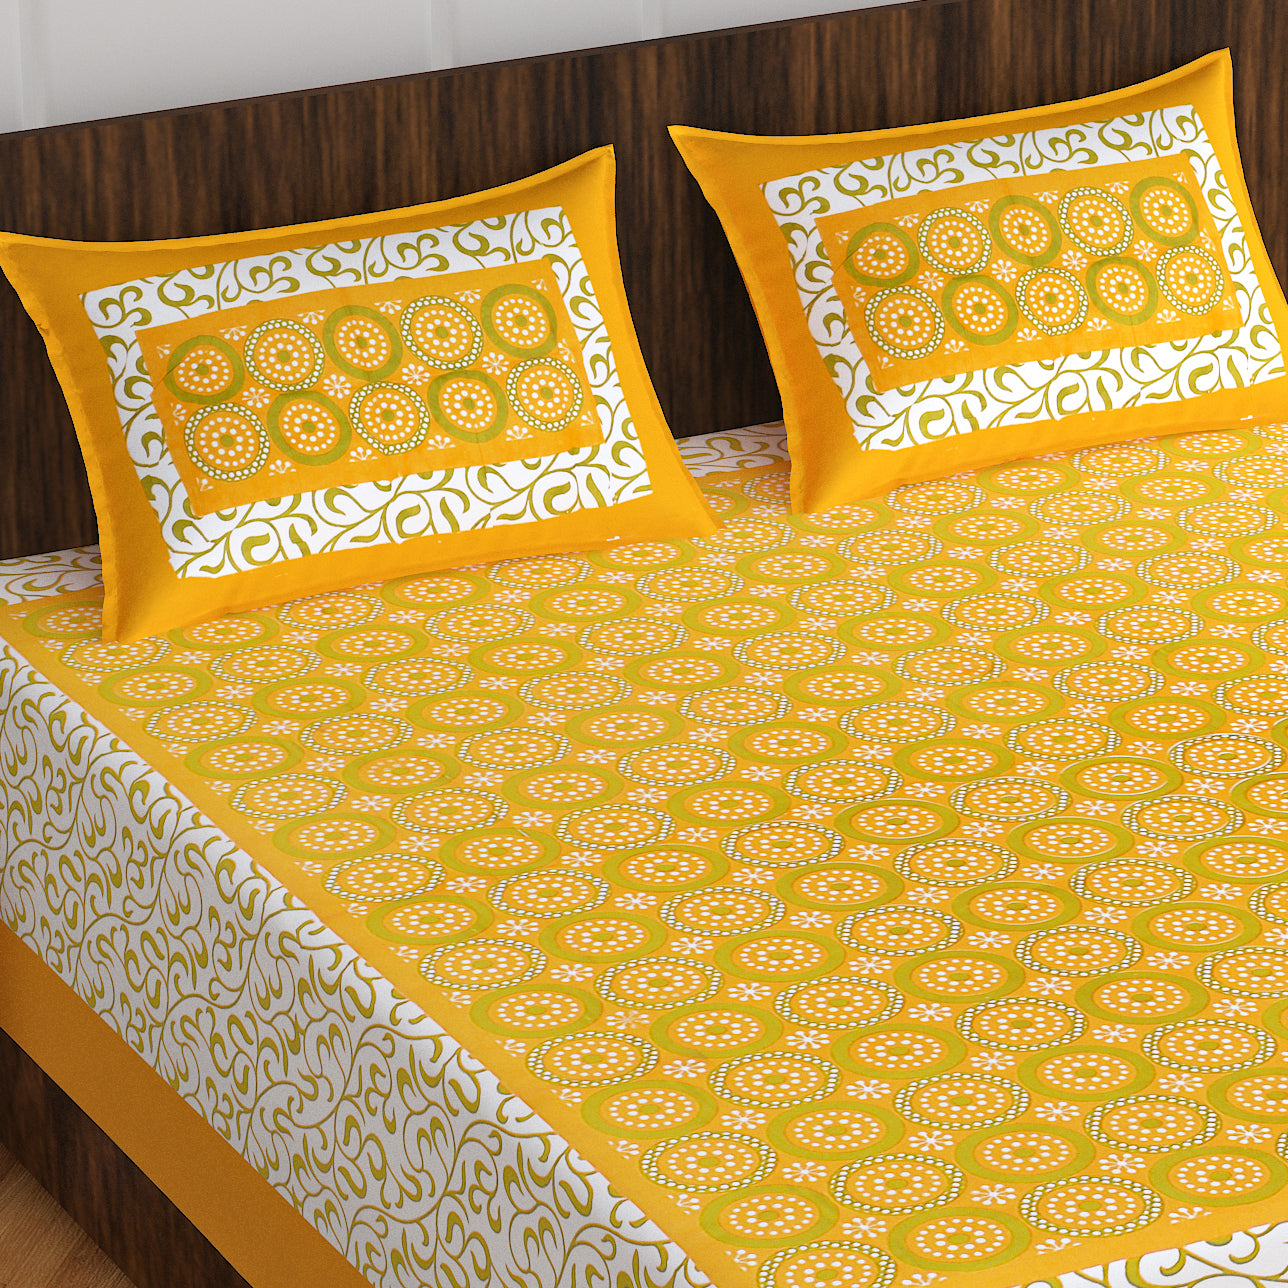 Rajasthani Trendy Bedsheet 100% Cotton Bedsheet 280-TC Cotton Queen Size Bedsheet With 2 Pillow Cover www.jaipurtohome.com